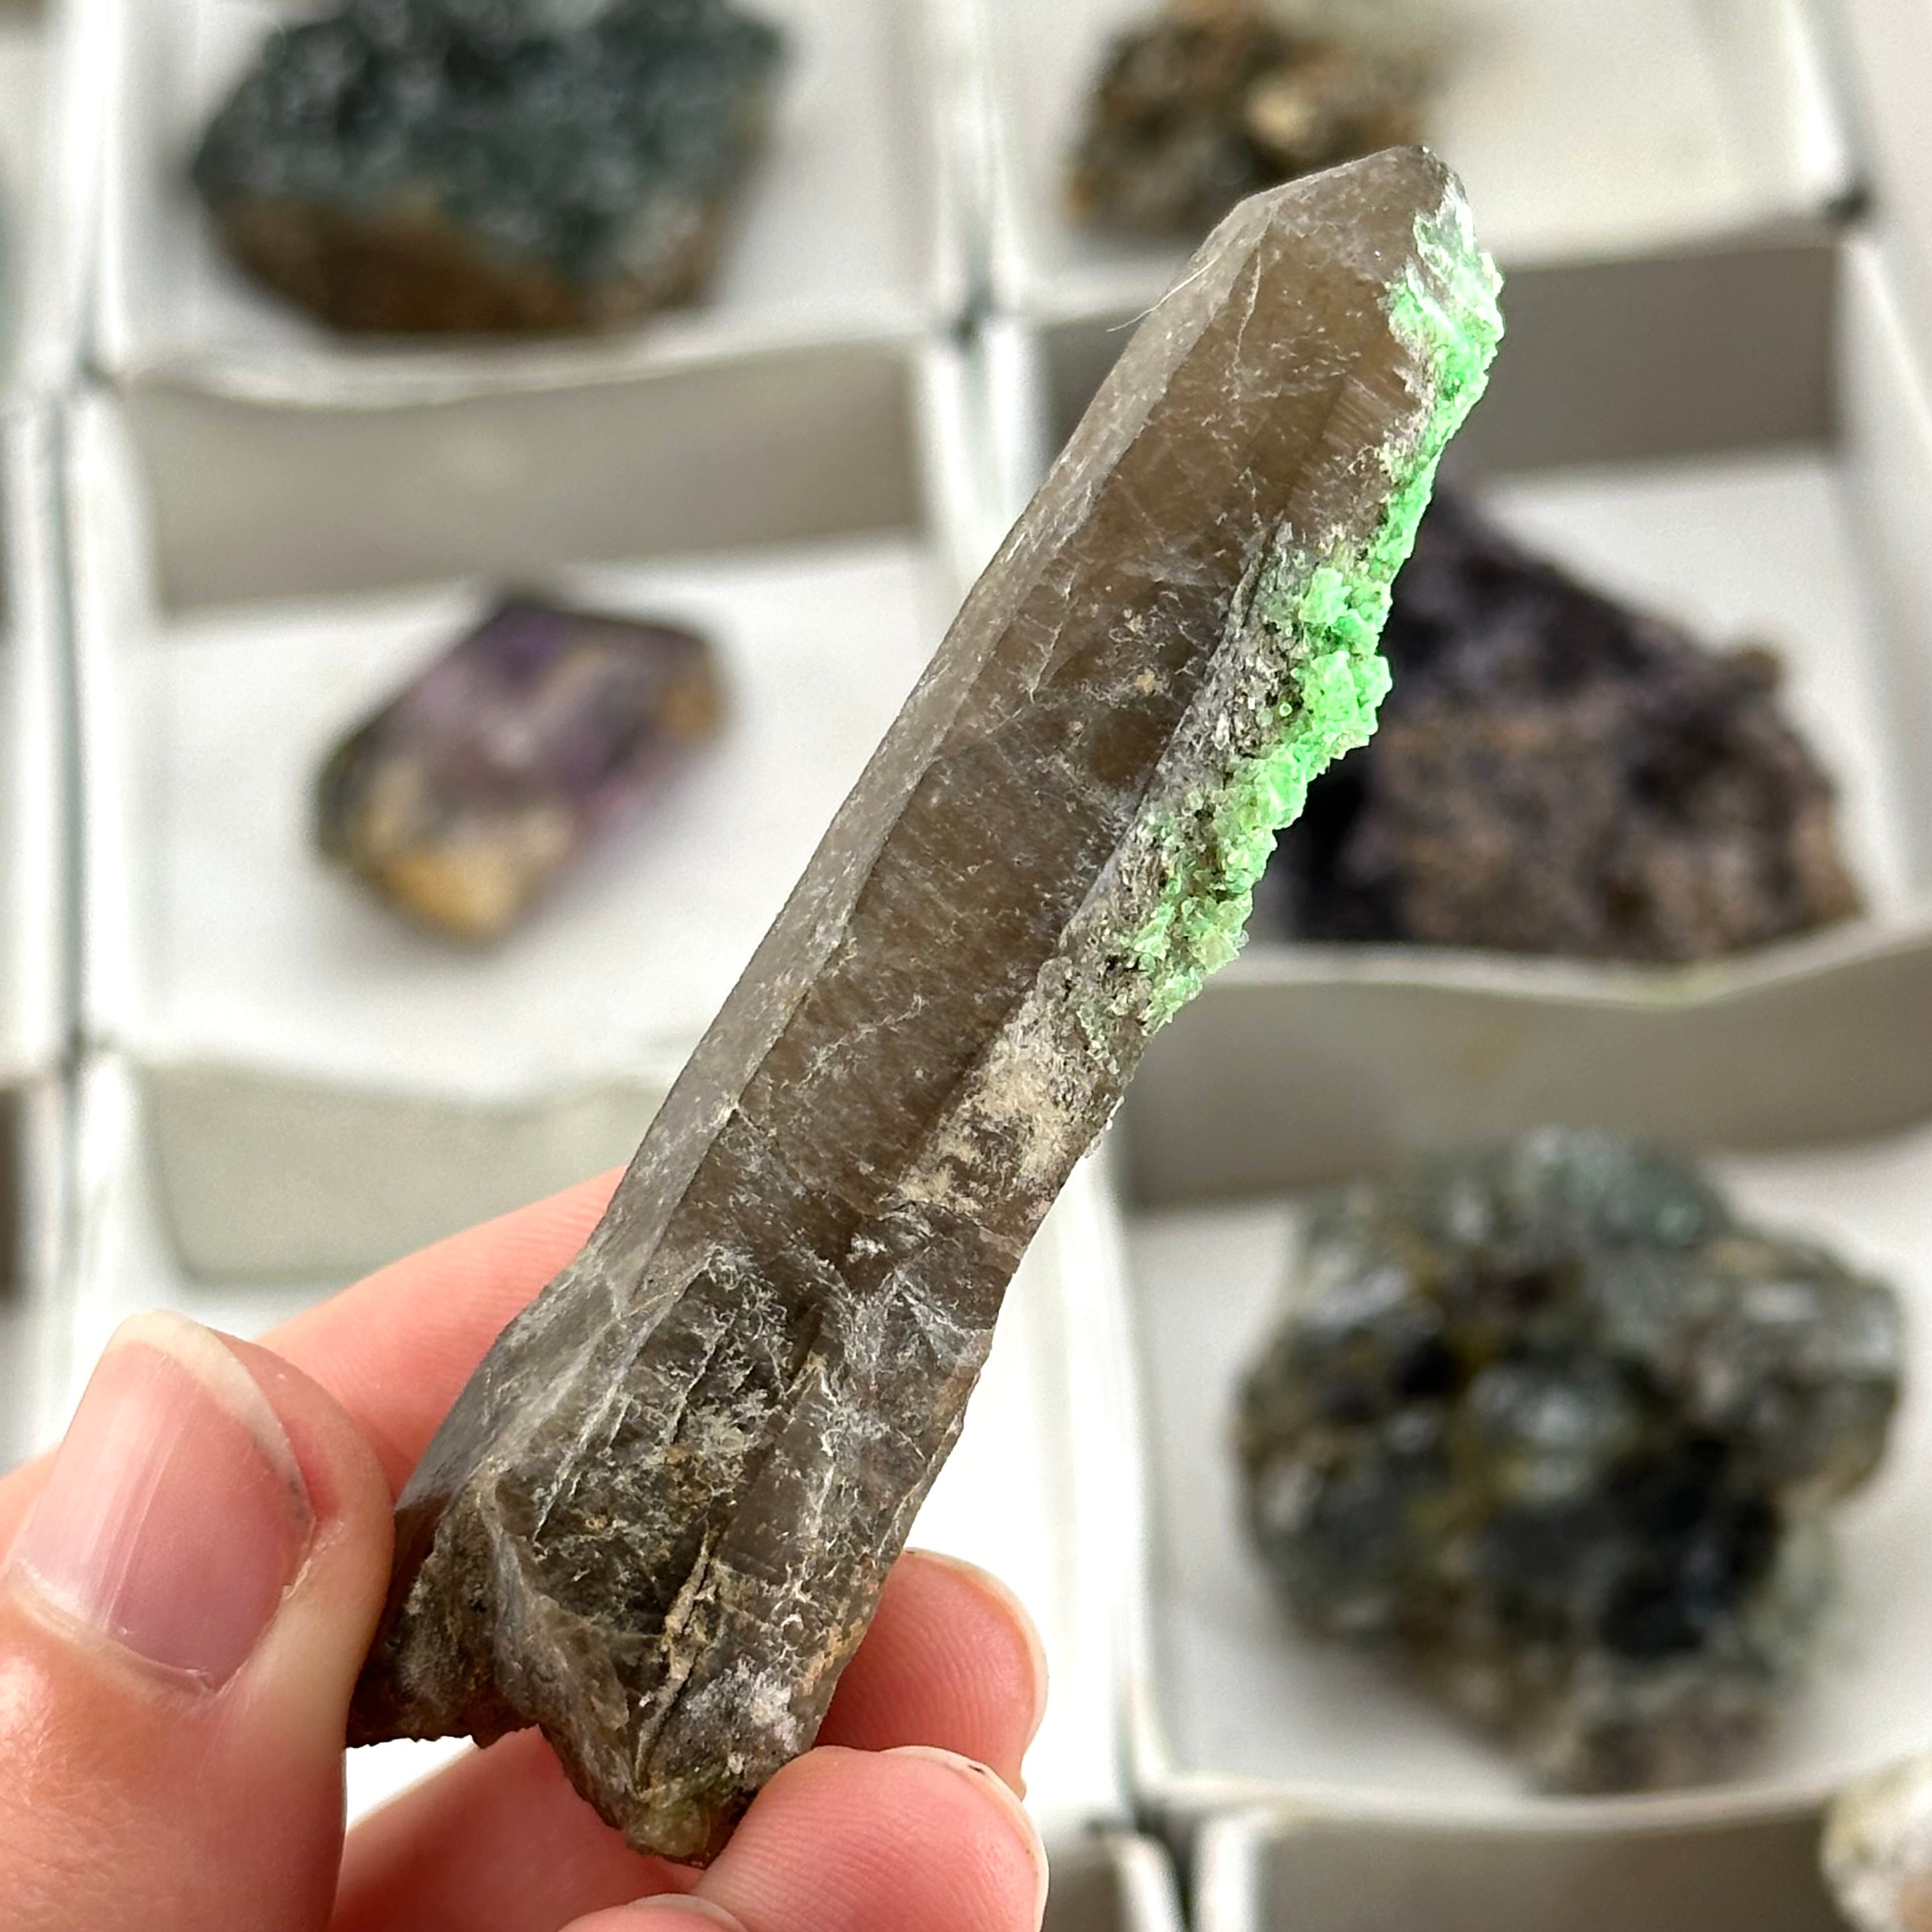 20 Piece/ 500g Flat of Mixed Minerals from Namibia | Okorusu Fluorite, Aquamarine, Hyalite Opal, Amethyst, Smoky Quartz